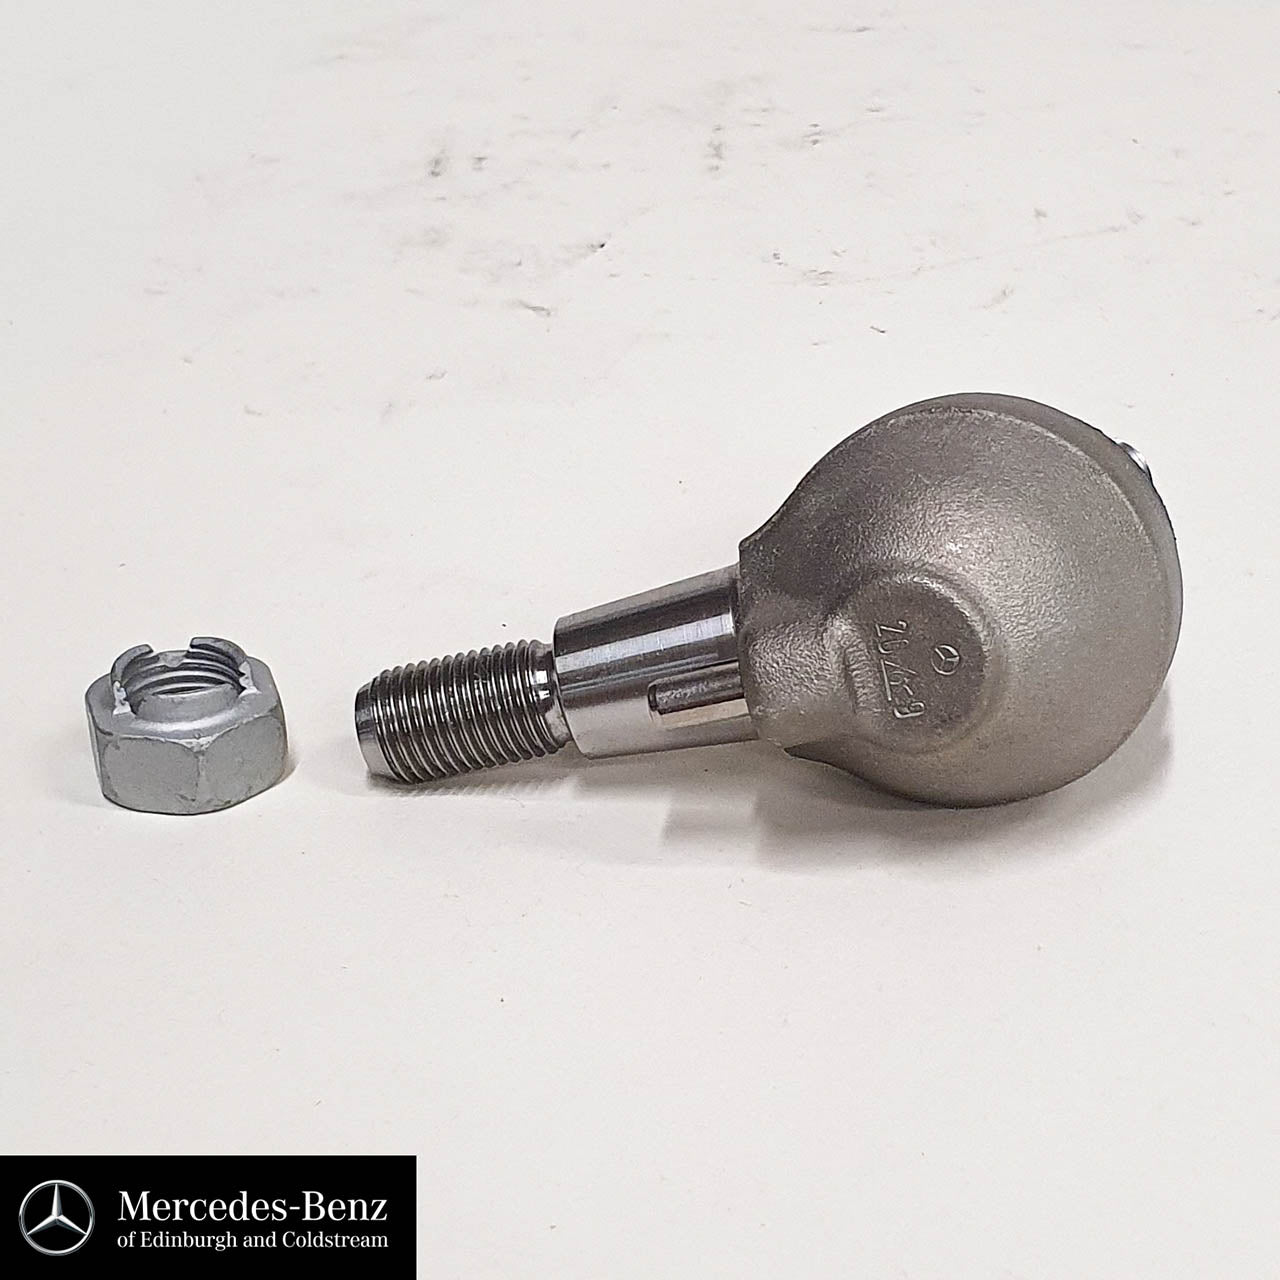 Genuine Mercedes-Benz bottom lower Ball Joint with lock nut C Class, E Class, CLK, SLK, S Class